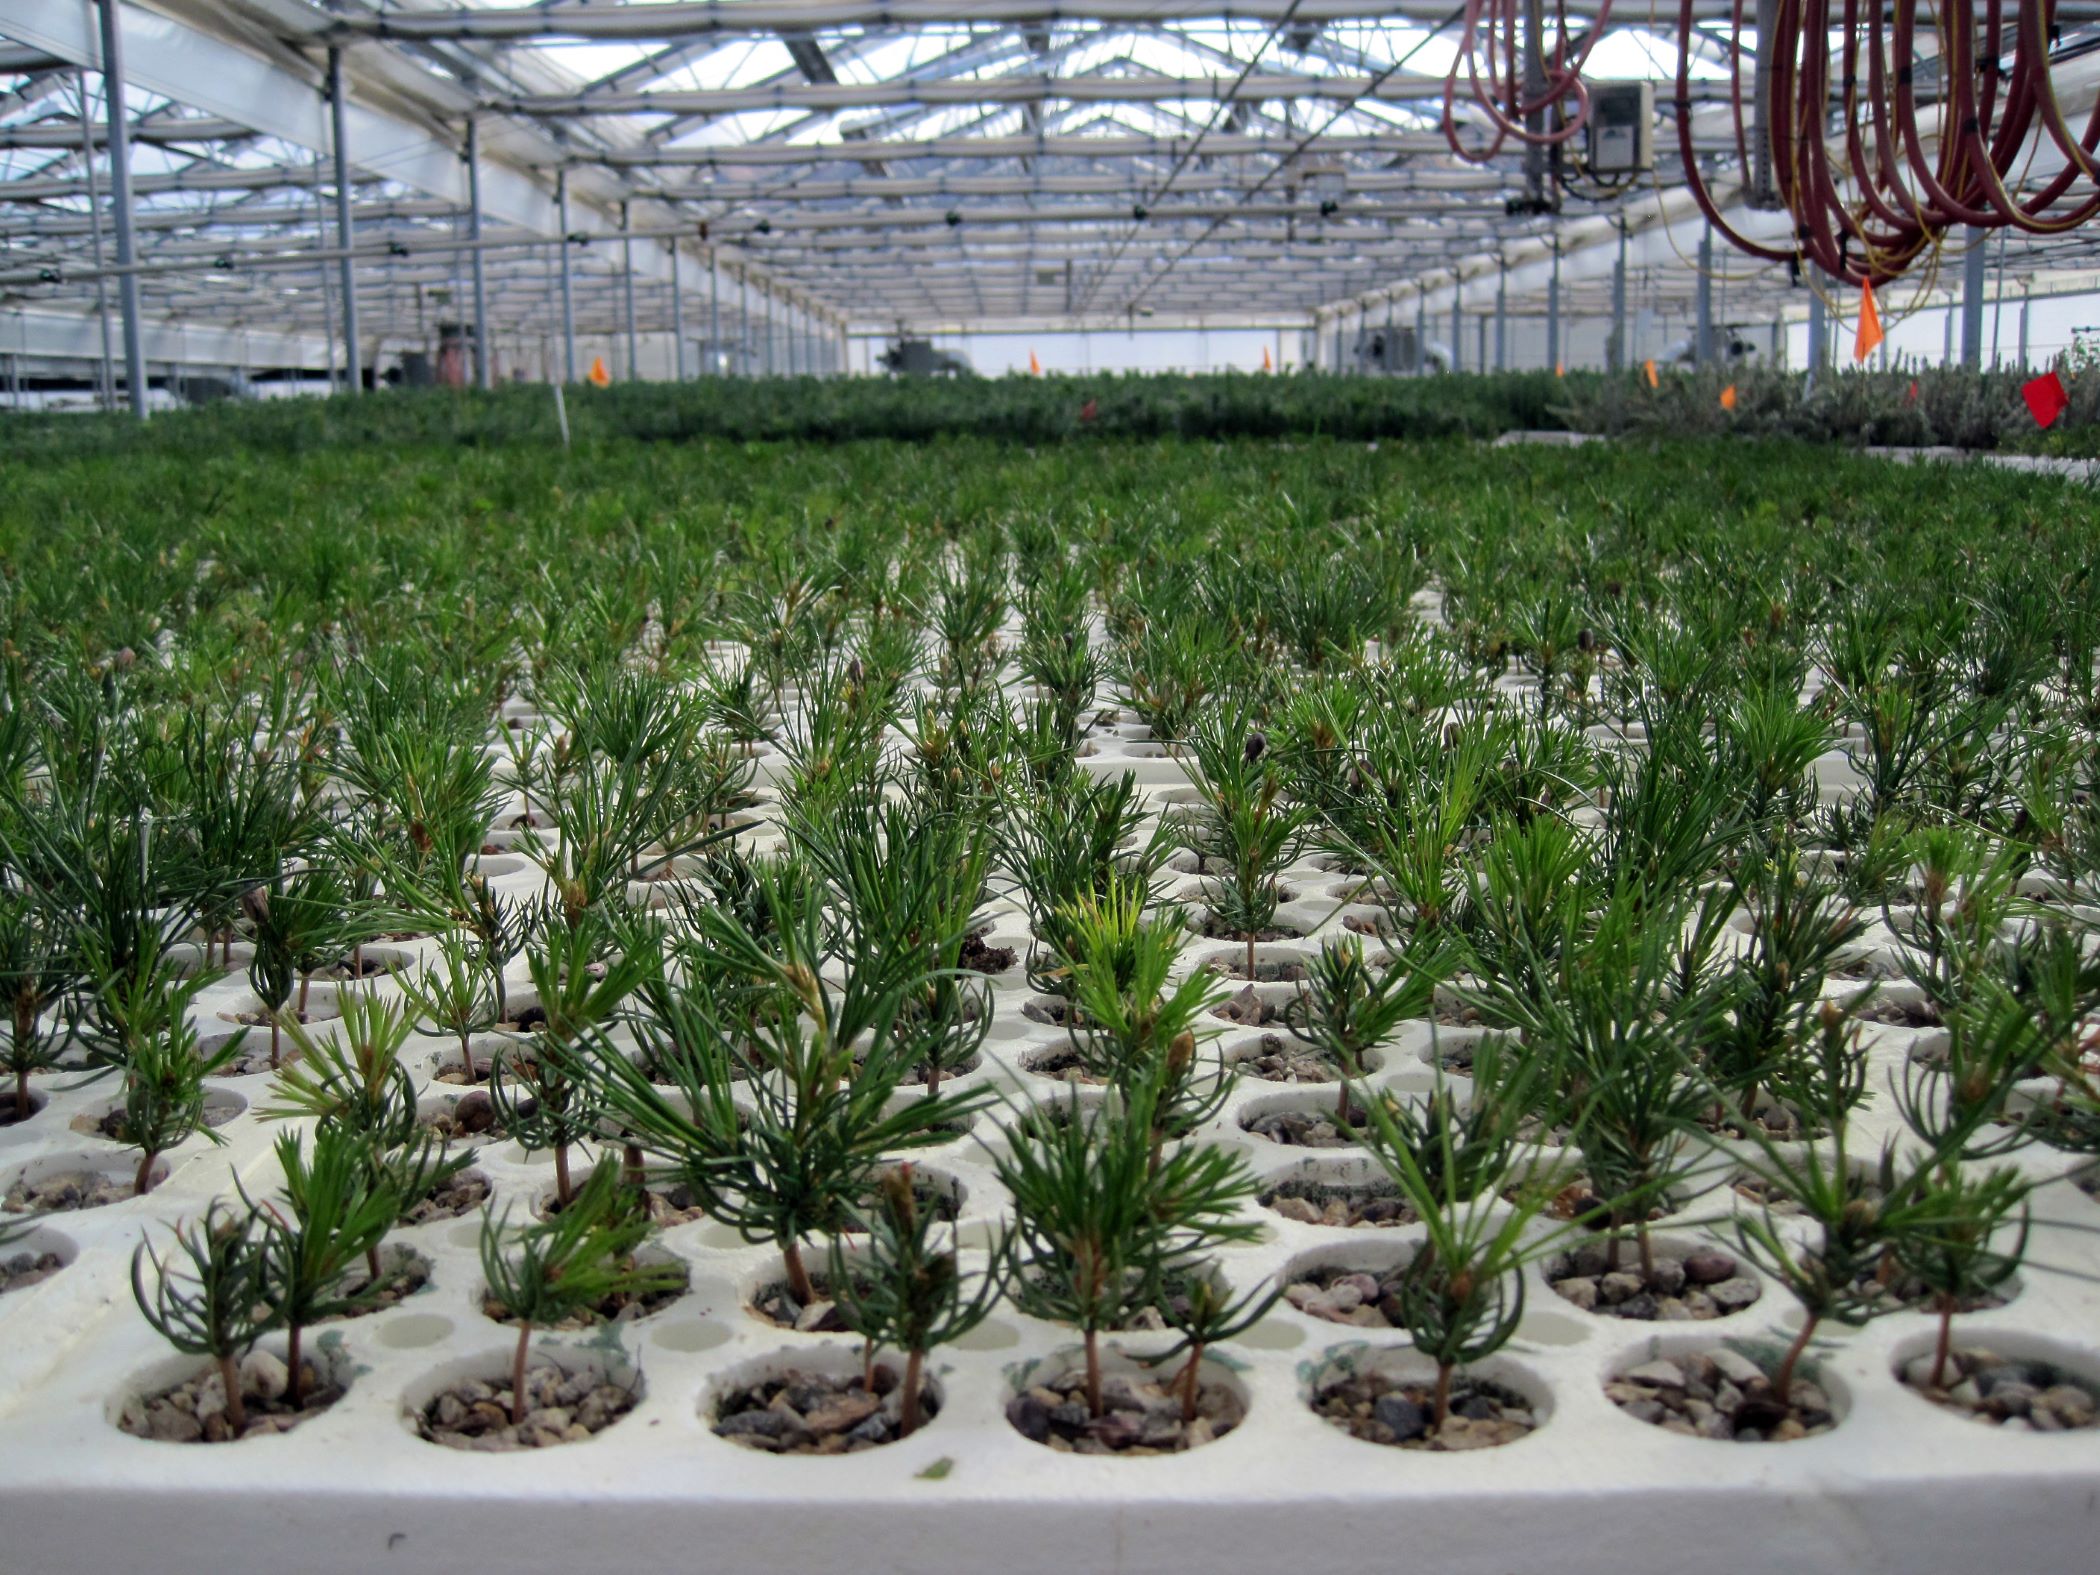 Rows and rows of seedlings in a nursery